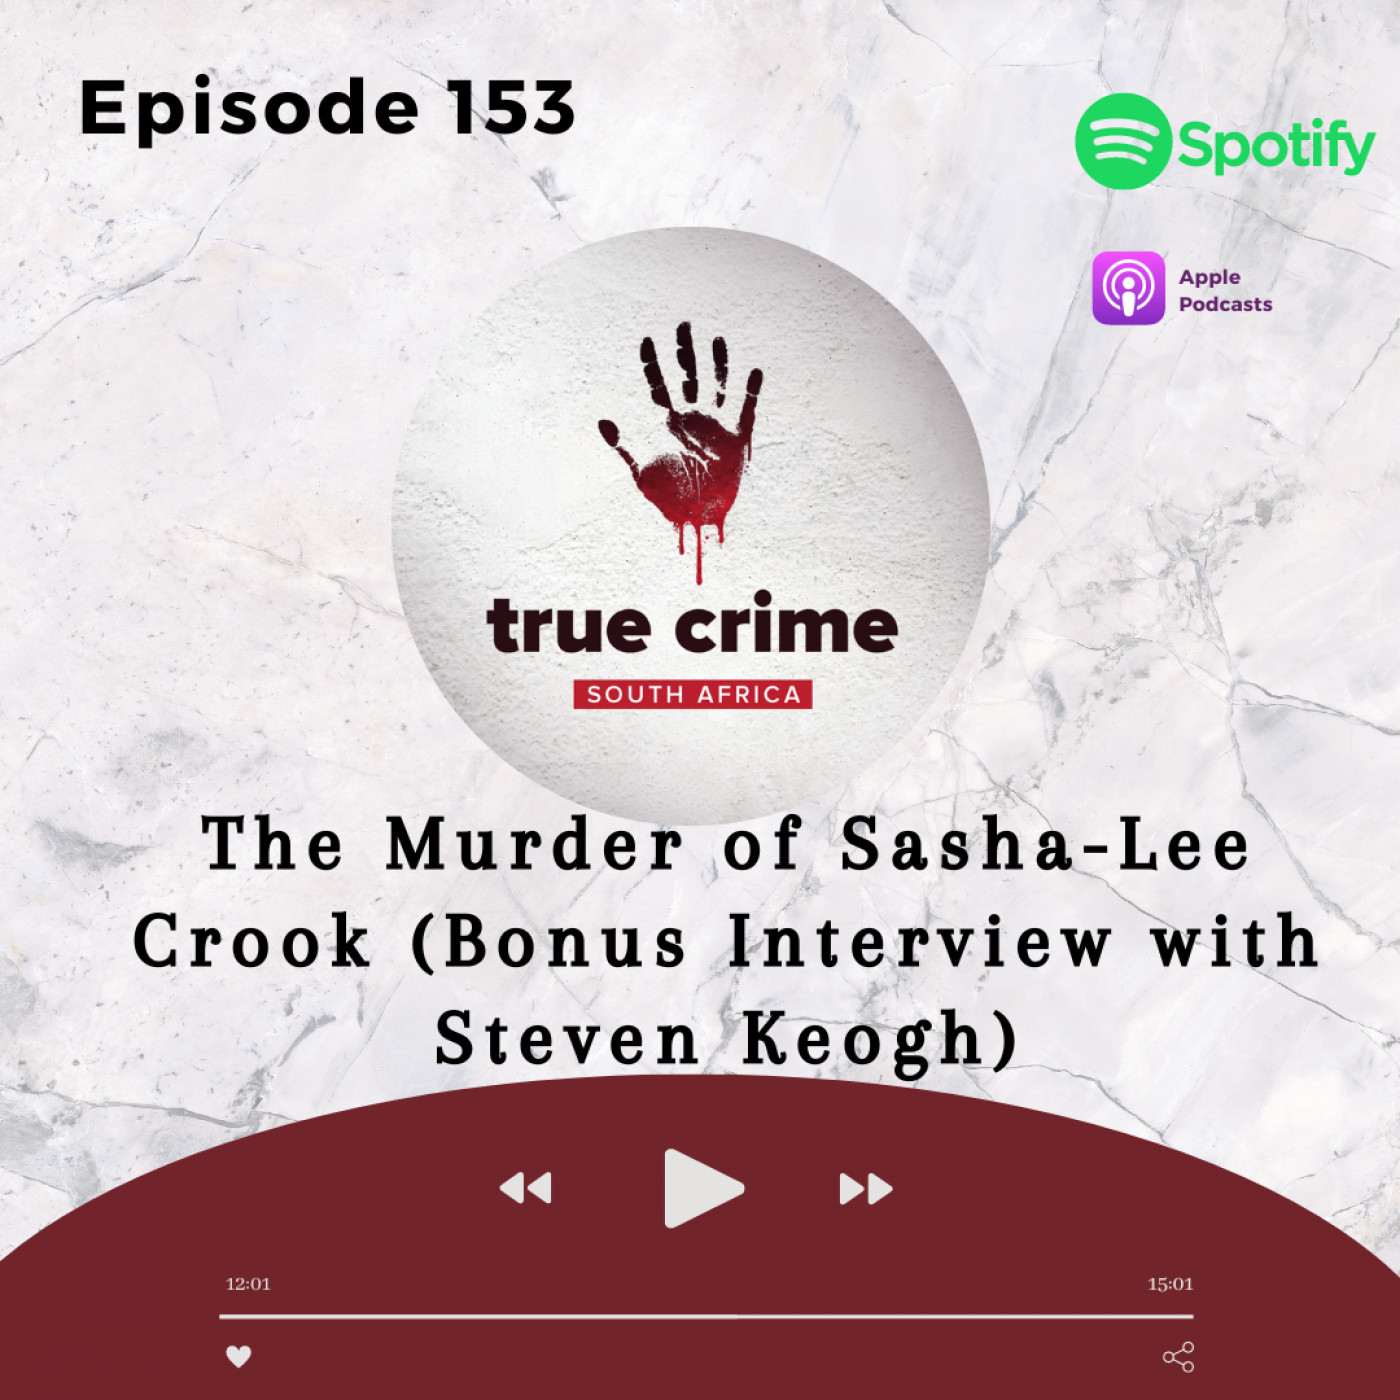 Episode 153 The Murder of Sasha-Leigh Crook (Bonus Interview with Steven Keogh)